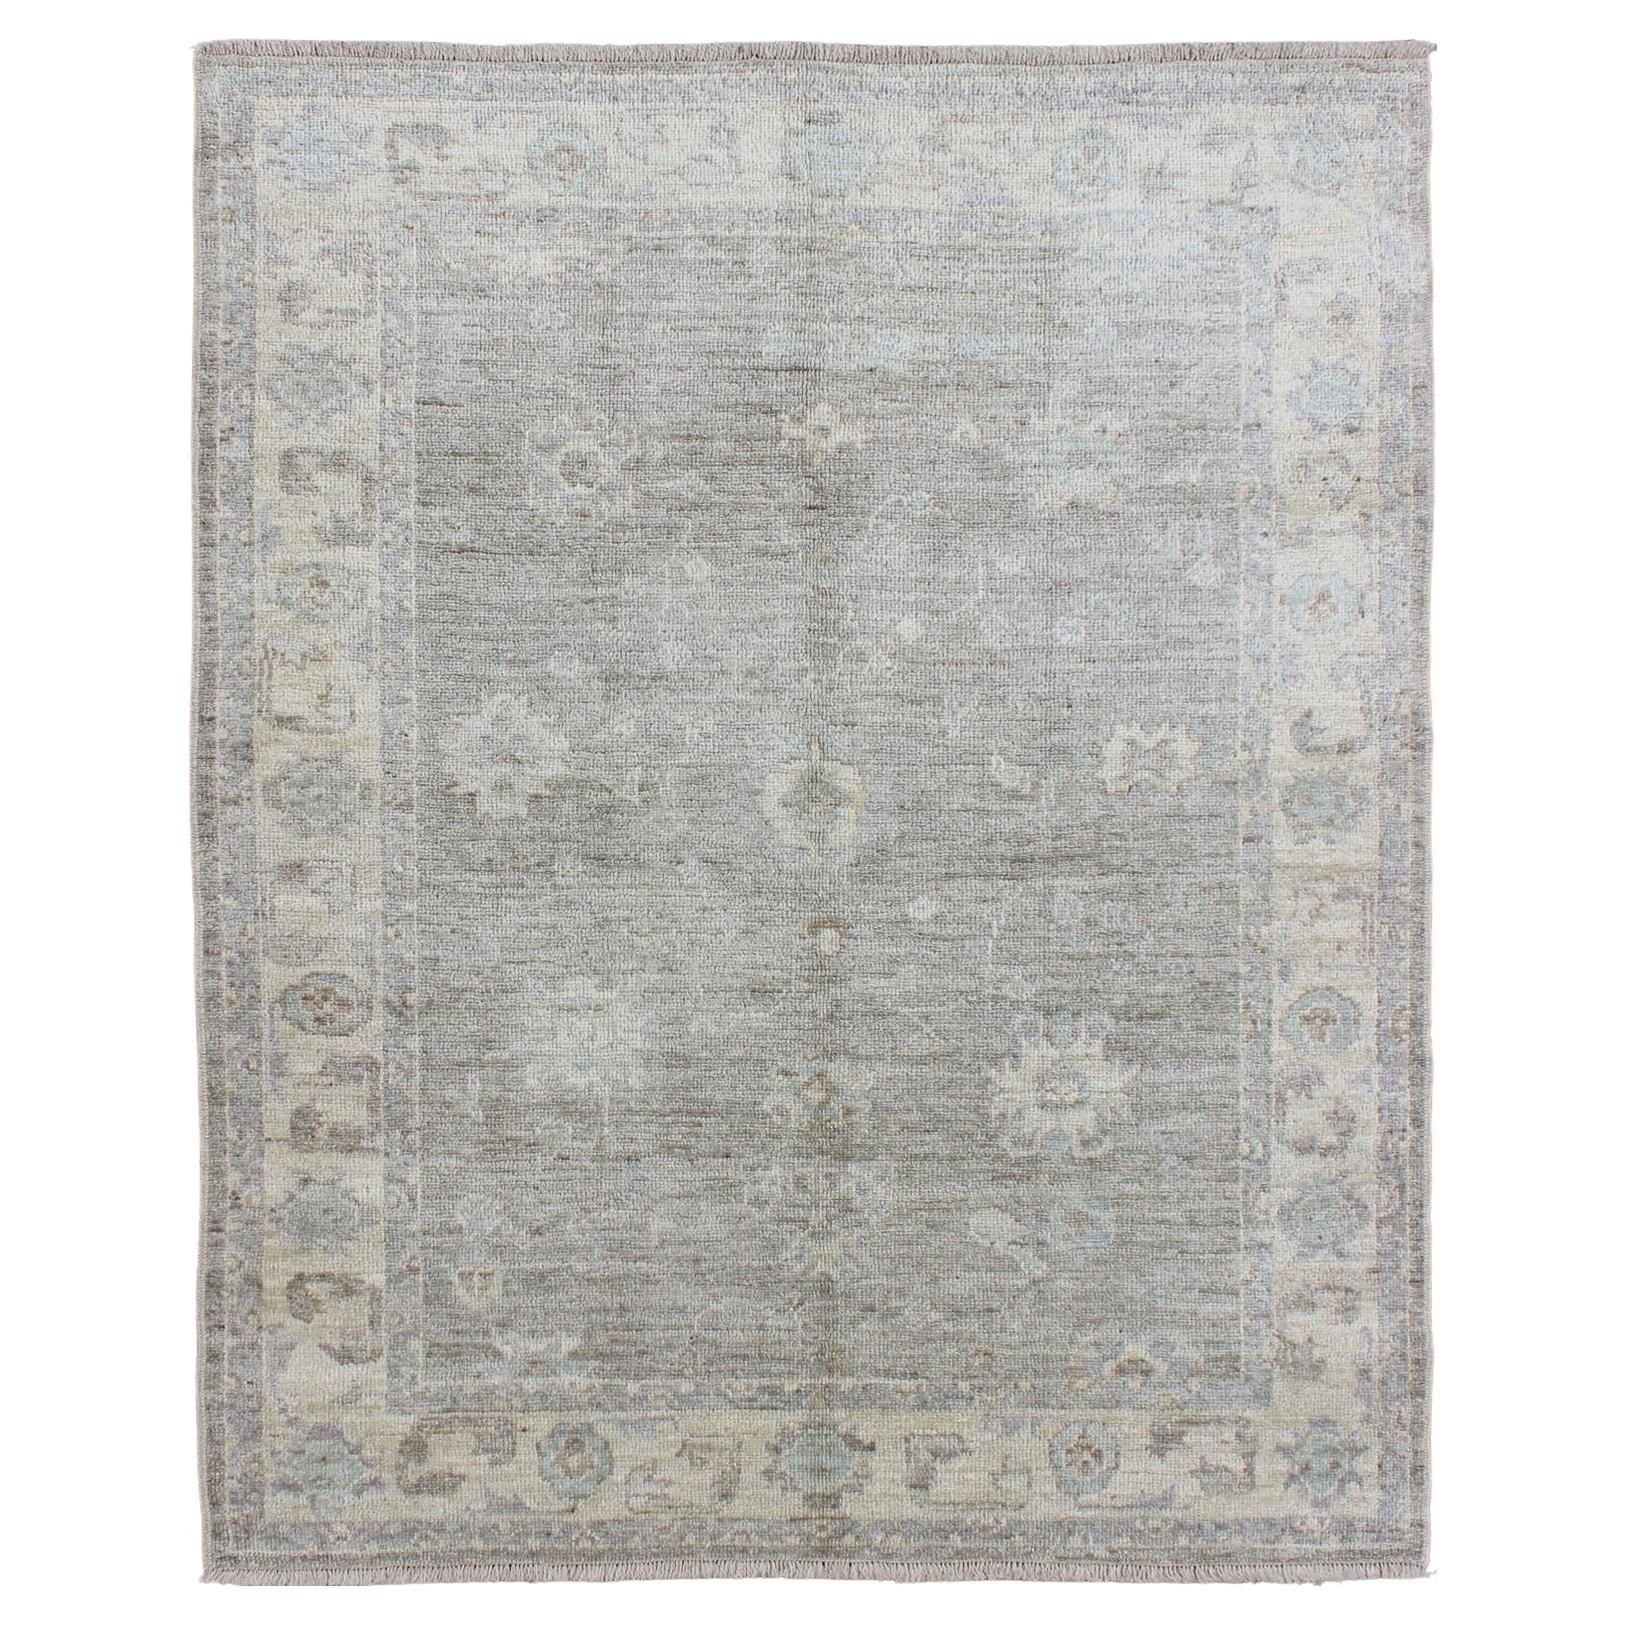 Keivan Woven Arts Angora Oushak Area rug with Pastel colors   5'2 x 7'6 For Sale